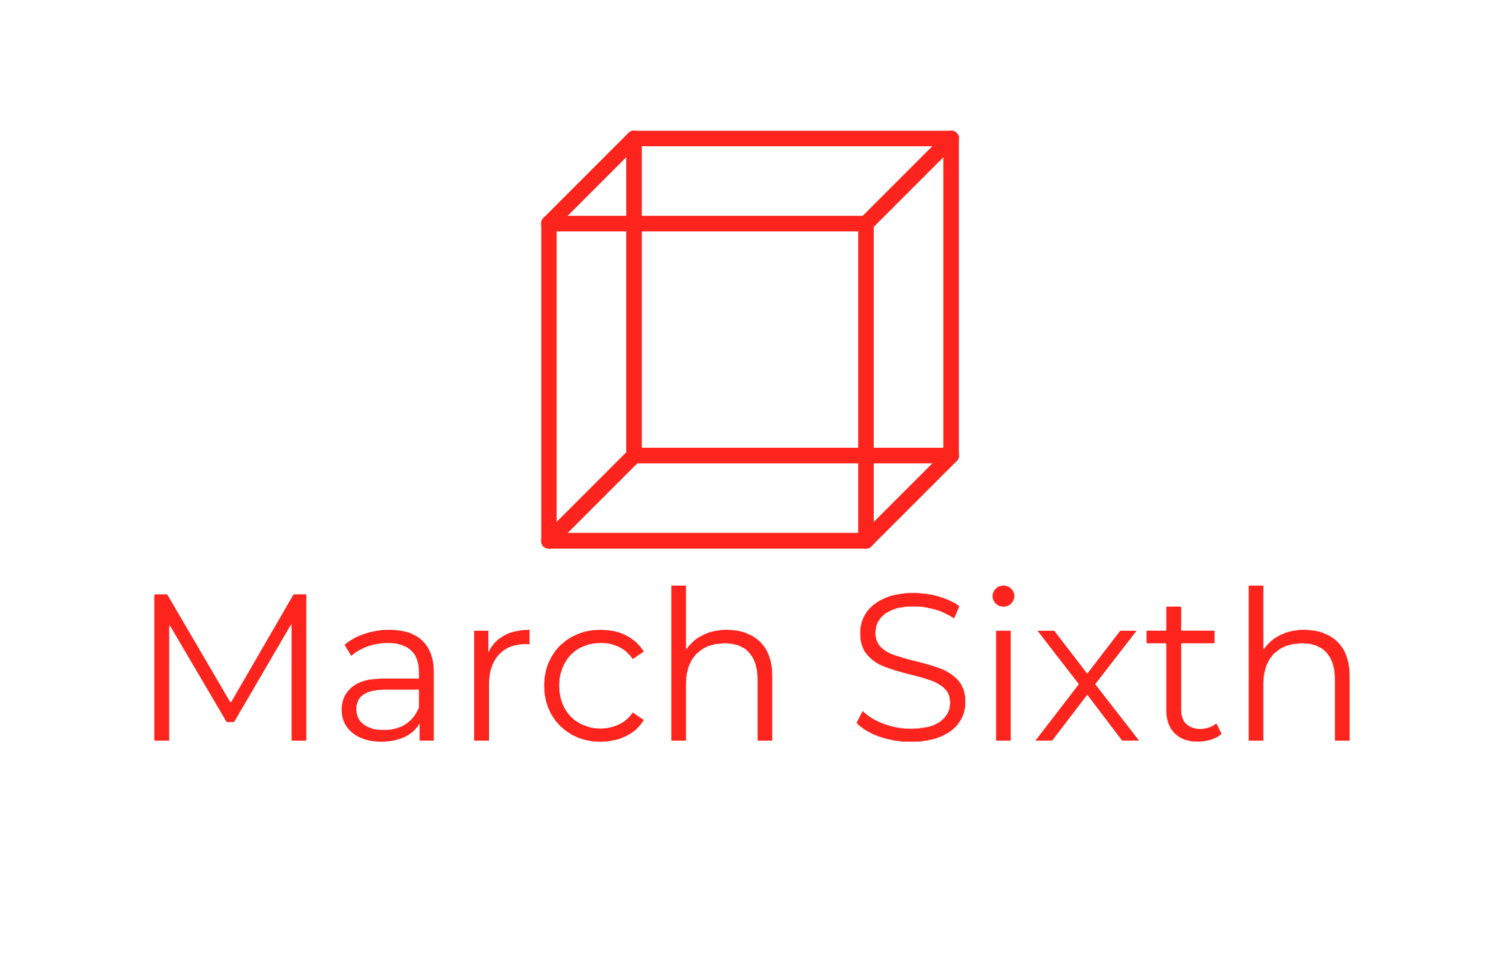 March Sixth